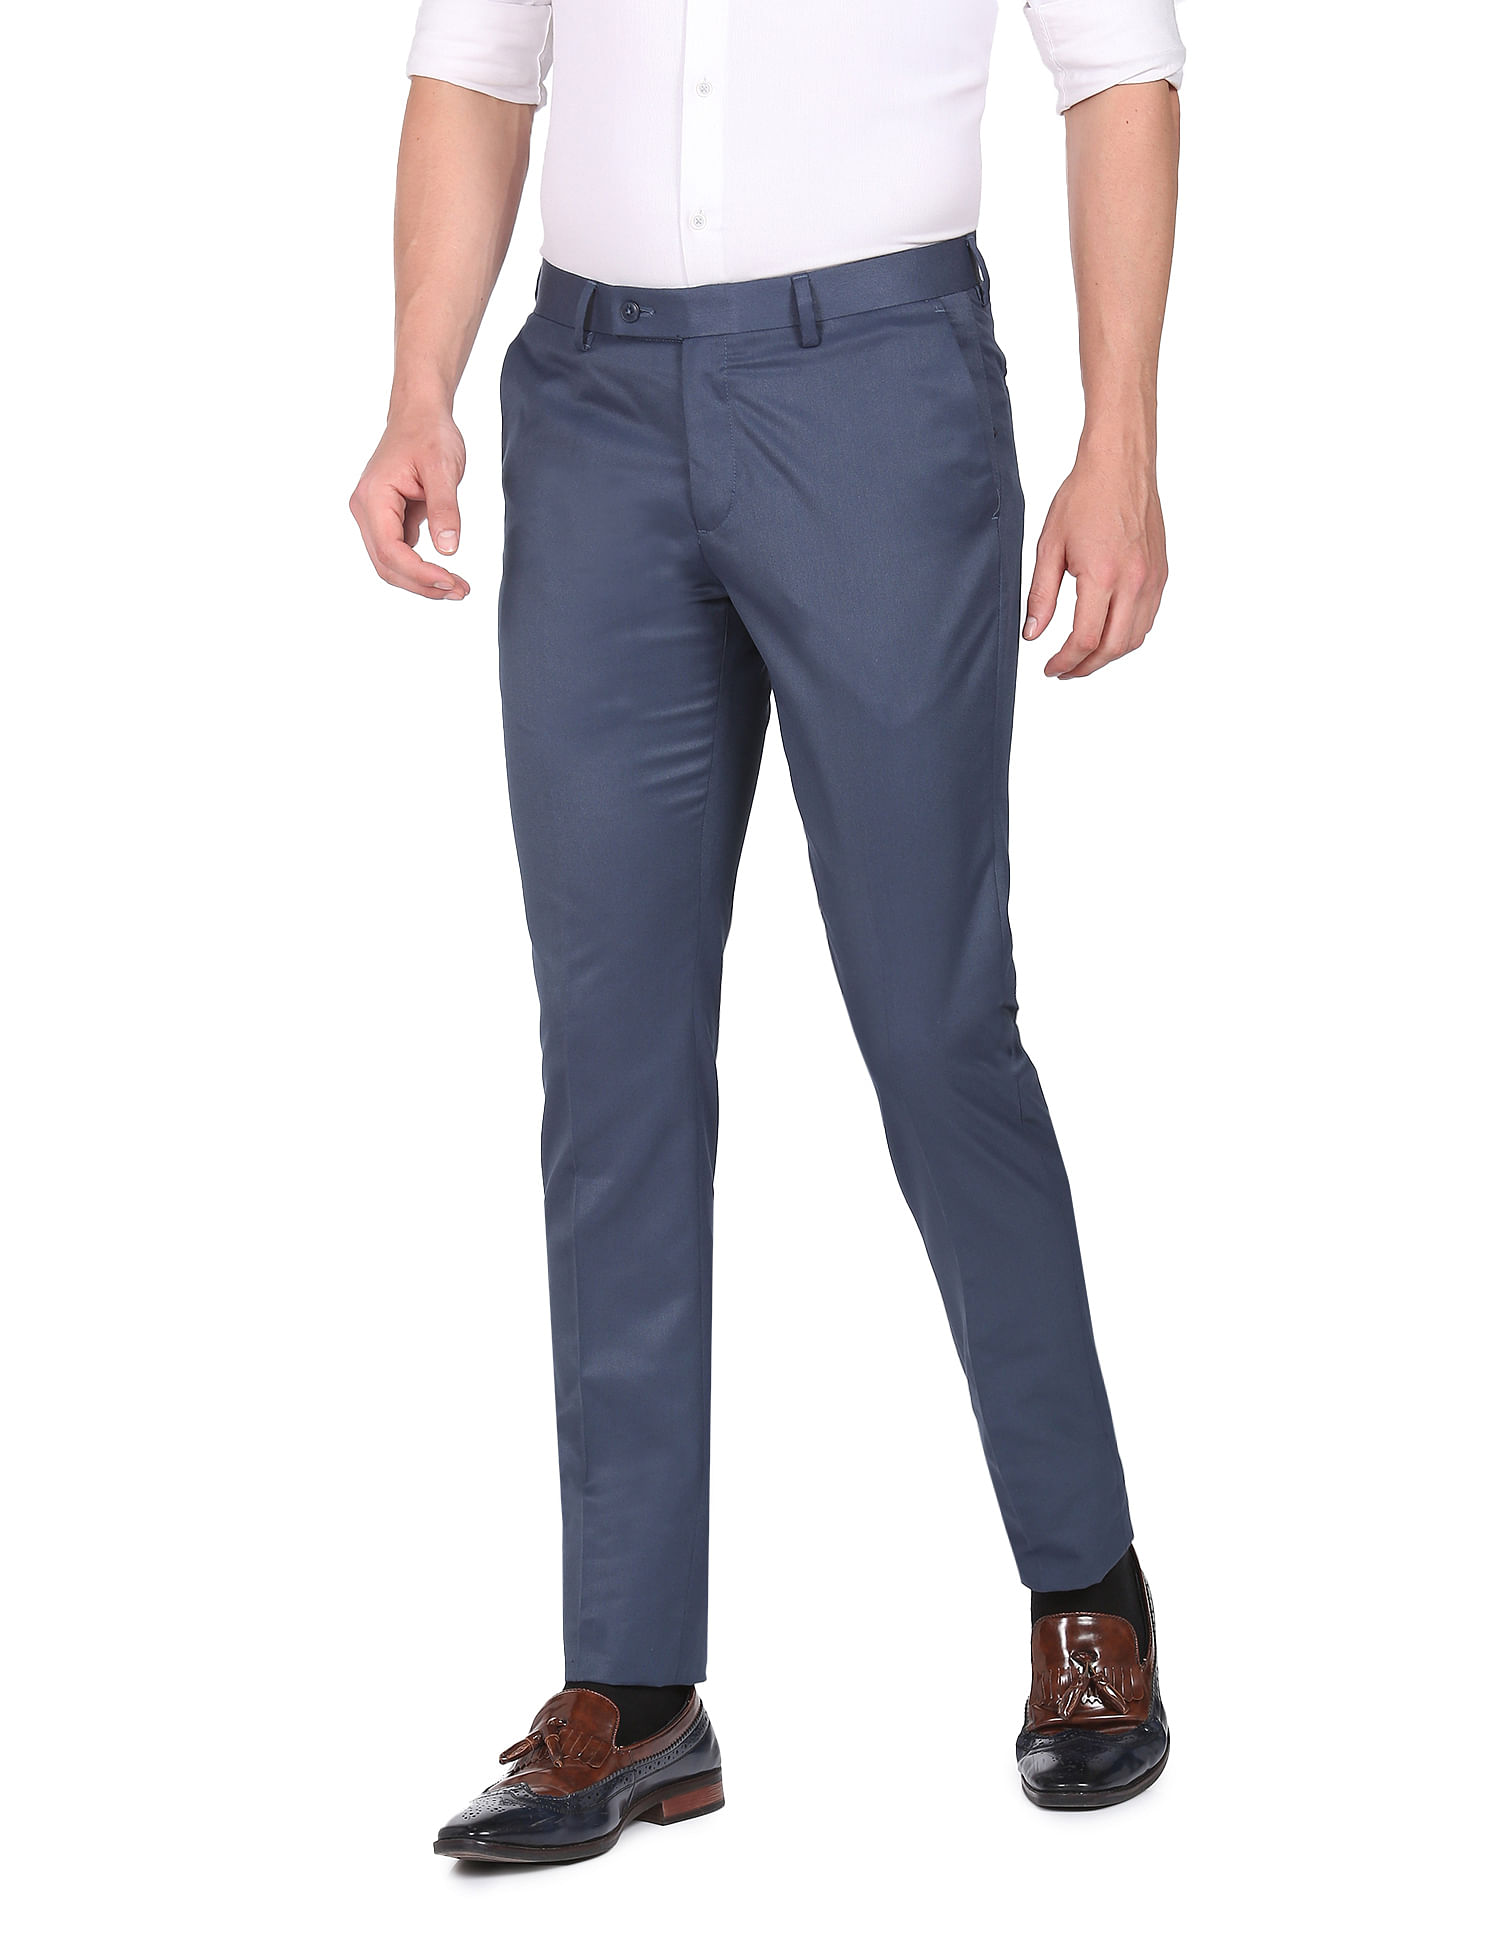 Buy MANCREW Formal Pants for Men - Formal Pants for Men Combo Pack of 3 -  Black, Blue, Coffee Slim Fit (28) at Amazon.in